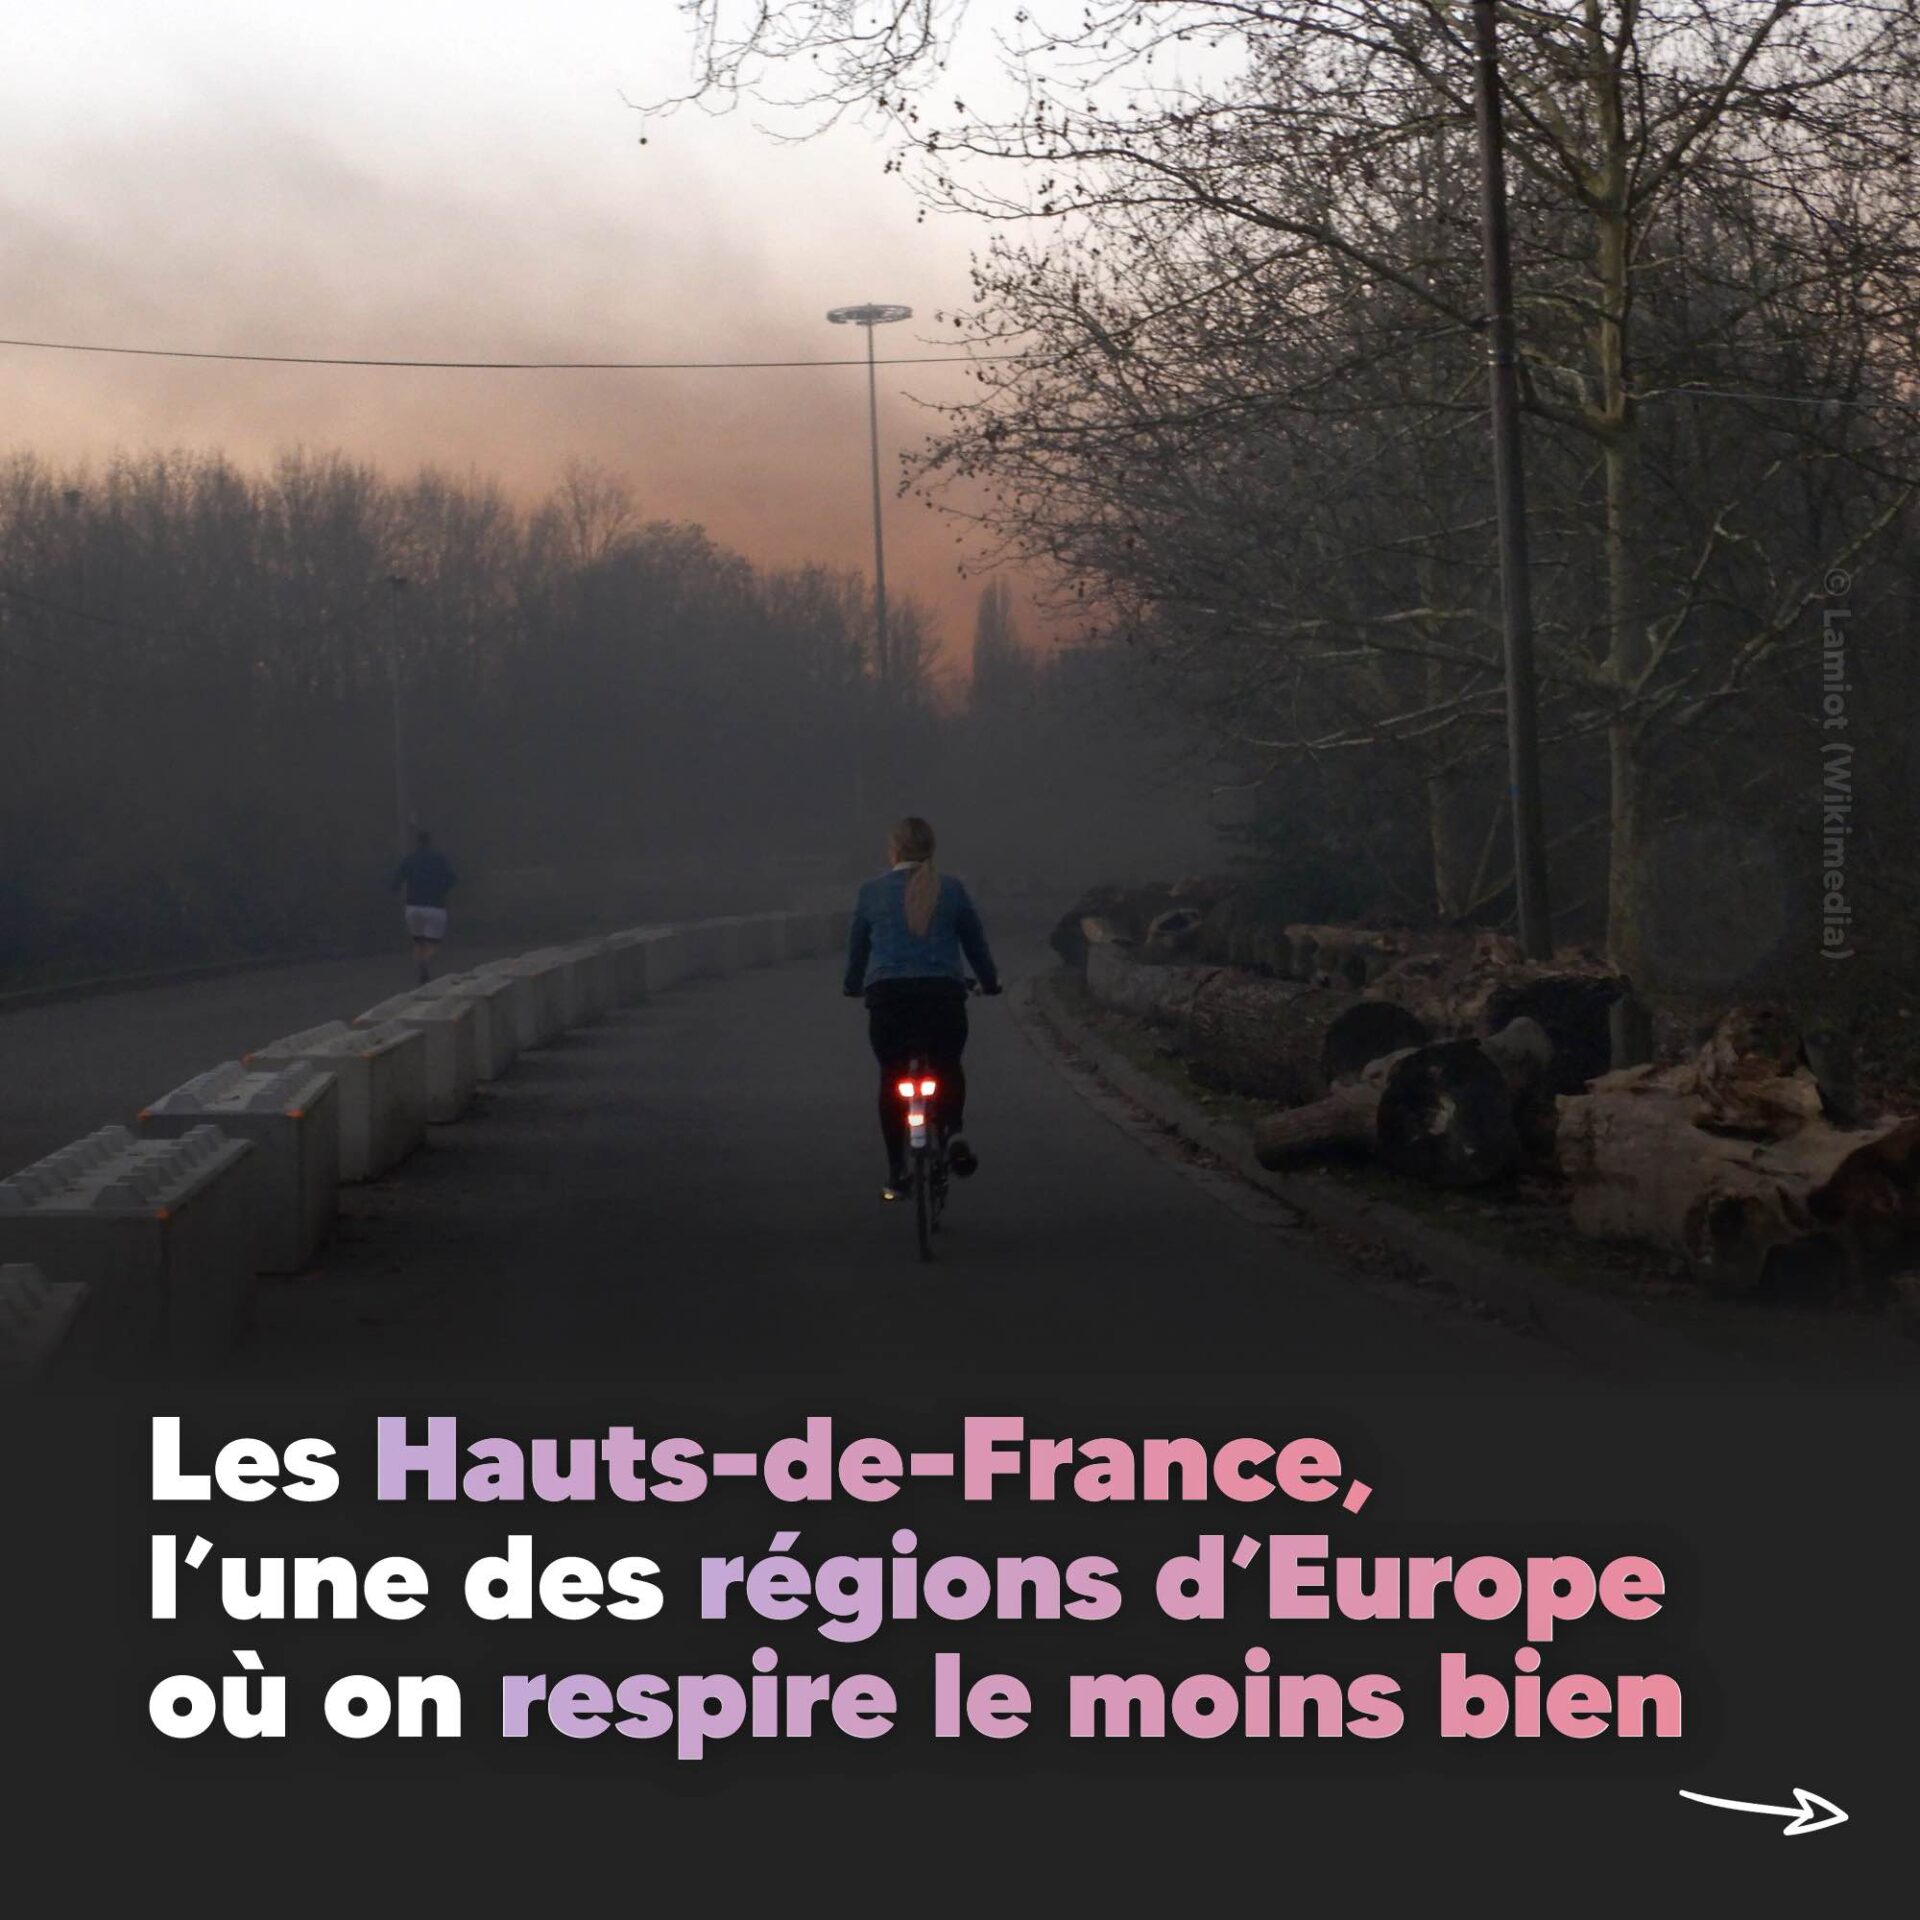 Pollution de l’air dans les Hauts-de-France : que respire-t-on ?